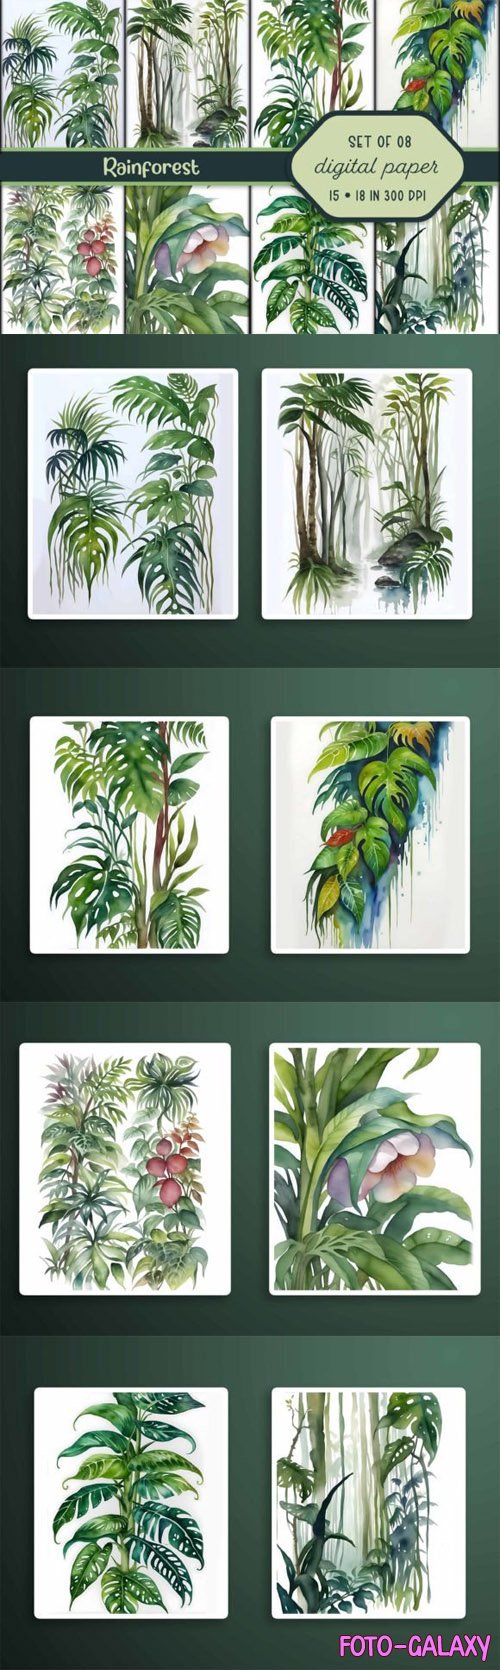 Amazing Watercolor Rainforest Illustrations Pack